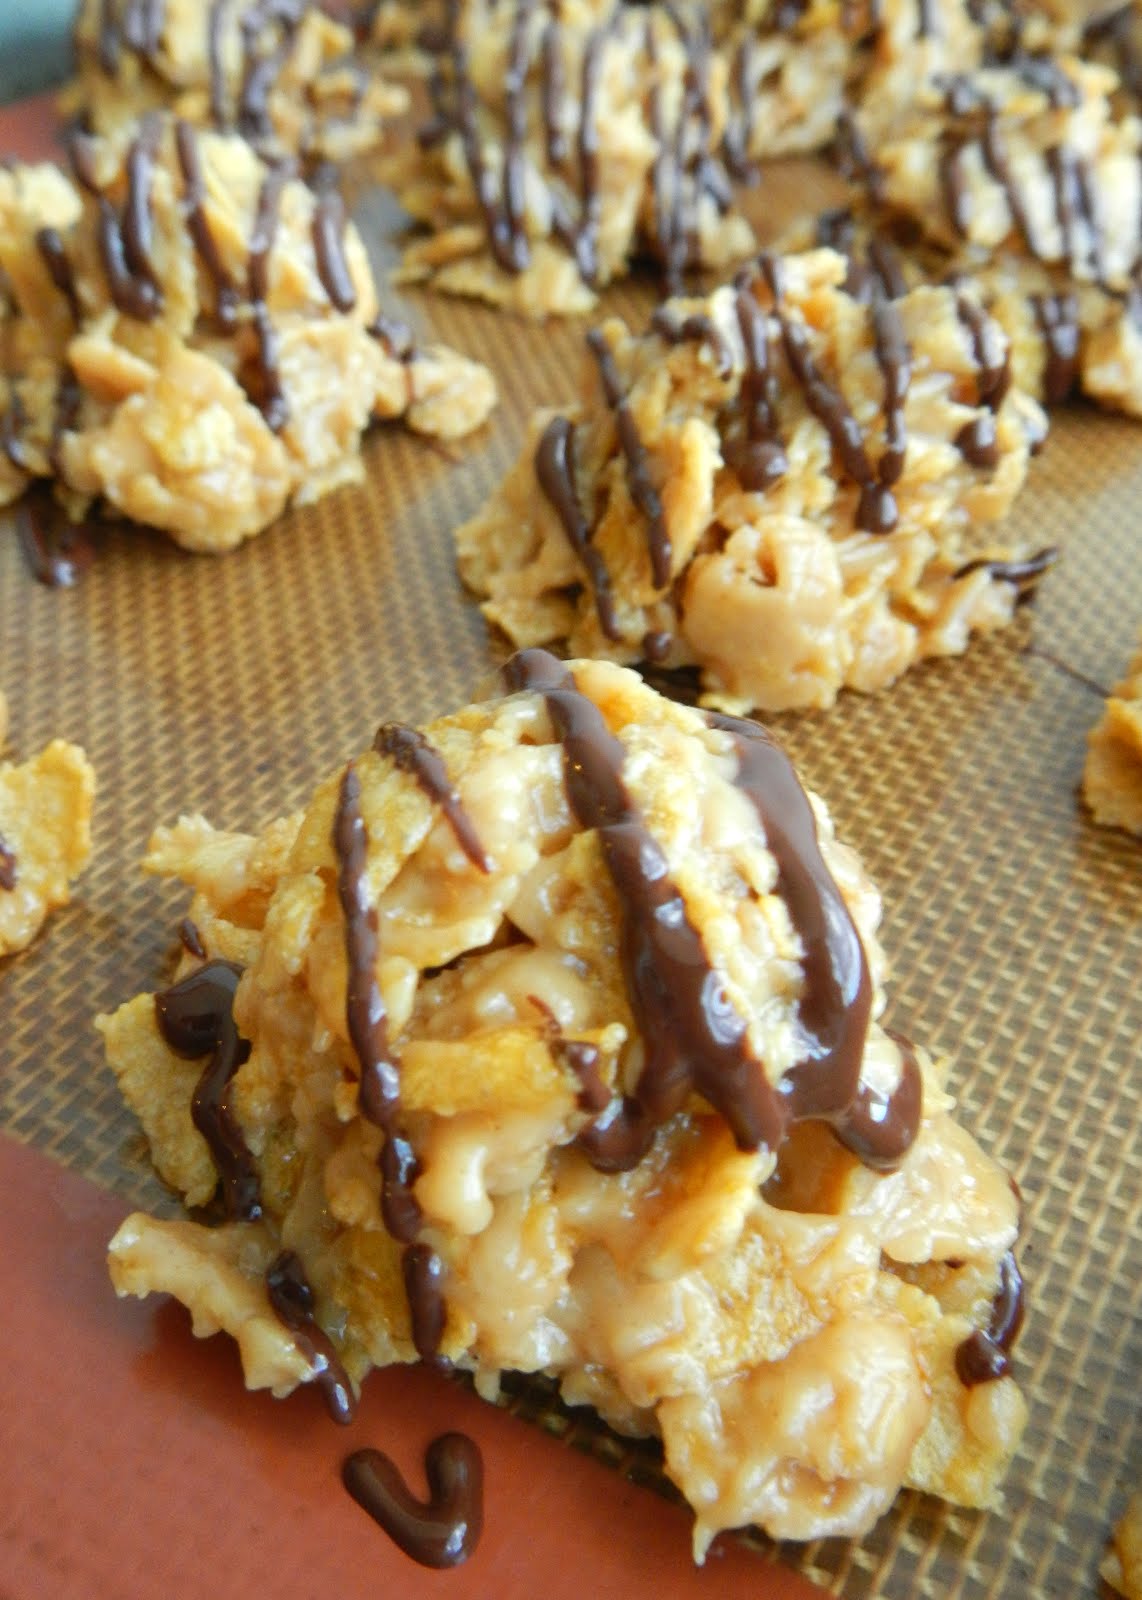 My Food Affair: Chocolate Peanut Butter Cornflake Cookies